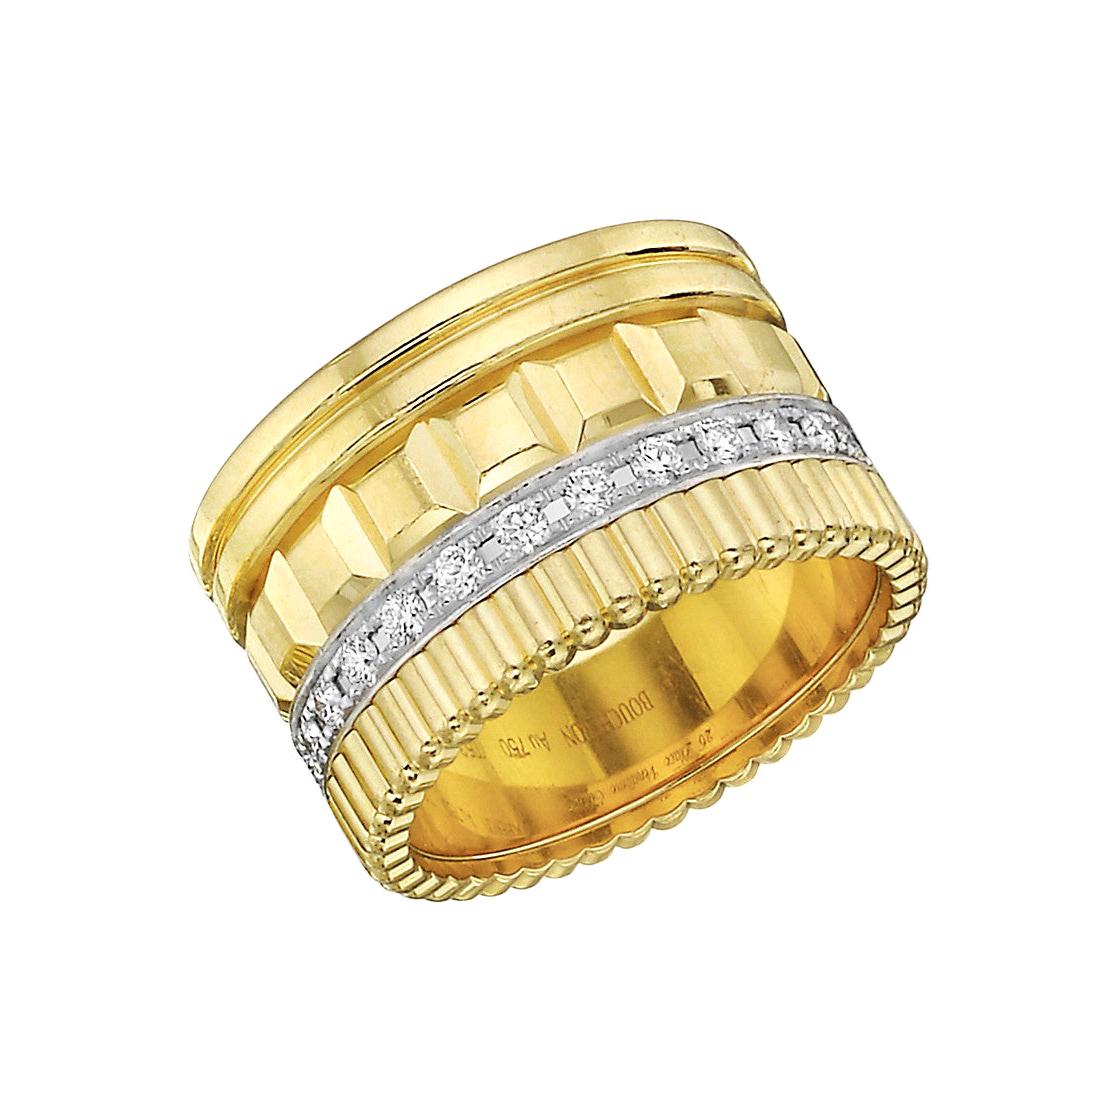 Boucheron 18 Karat Yellow Gold and Diamond "Quatre" Band Ring